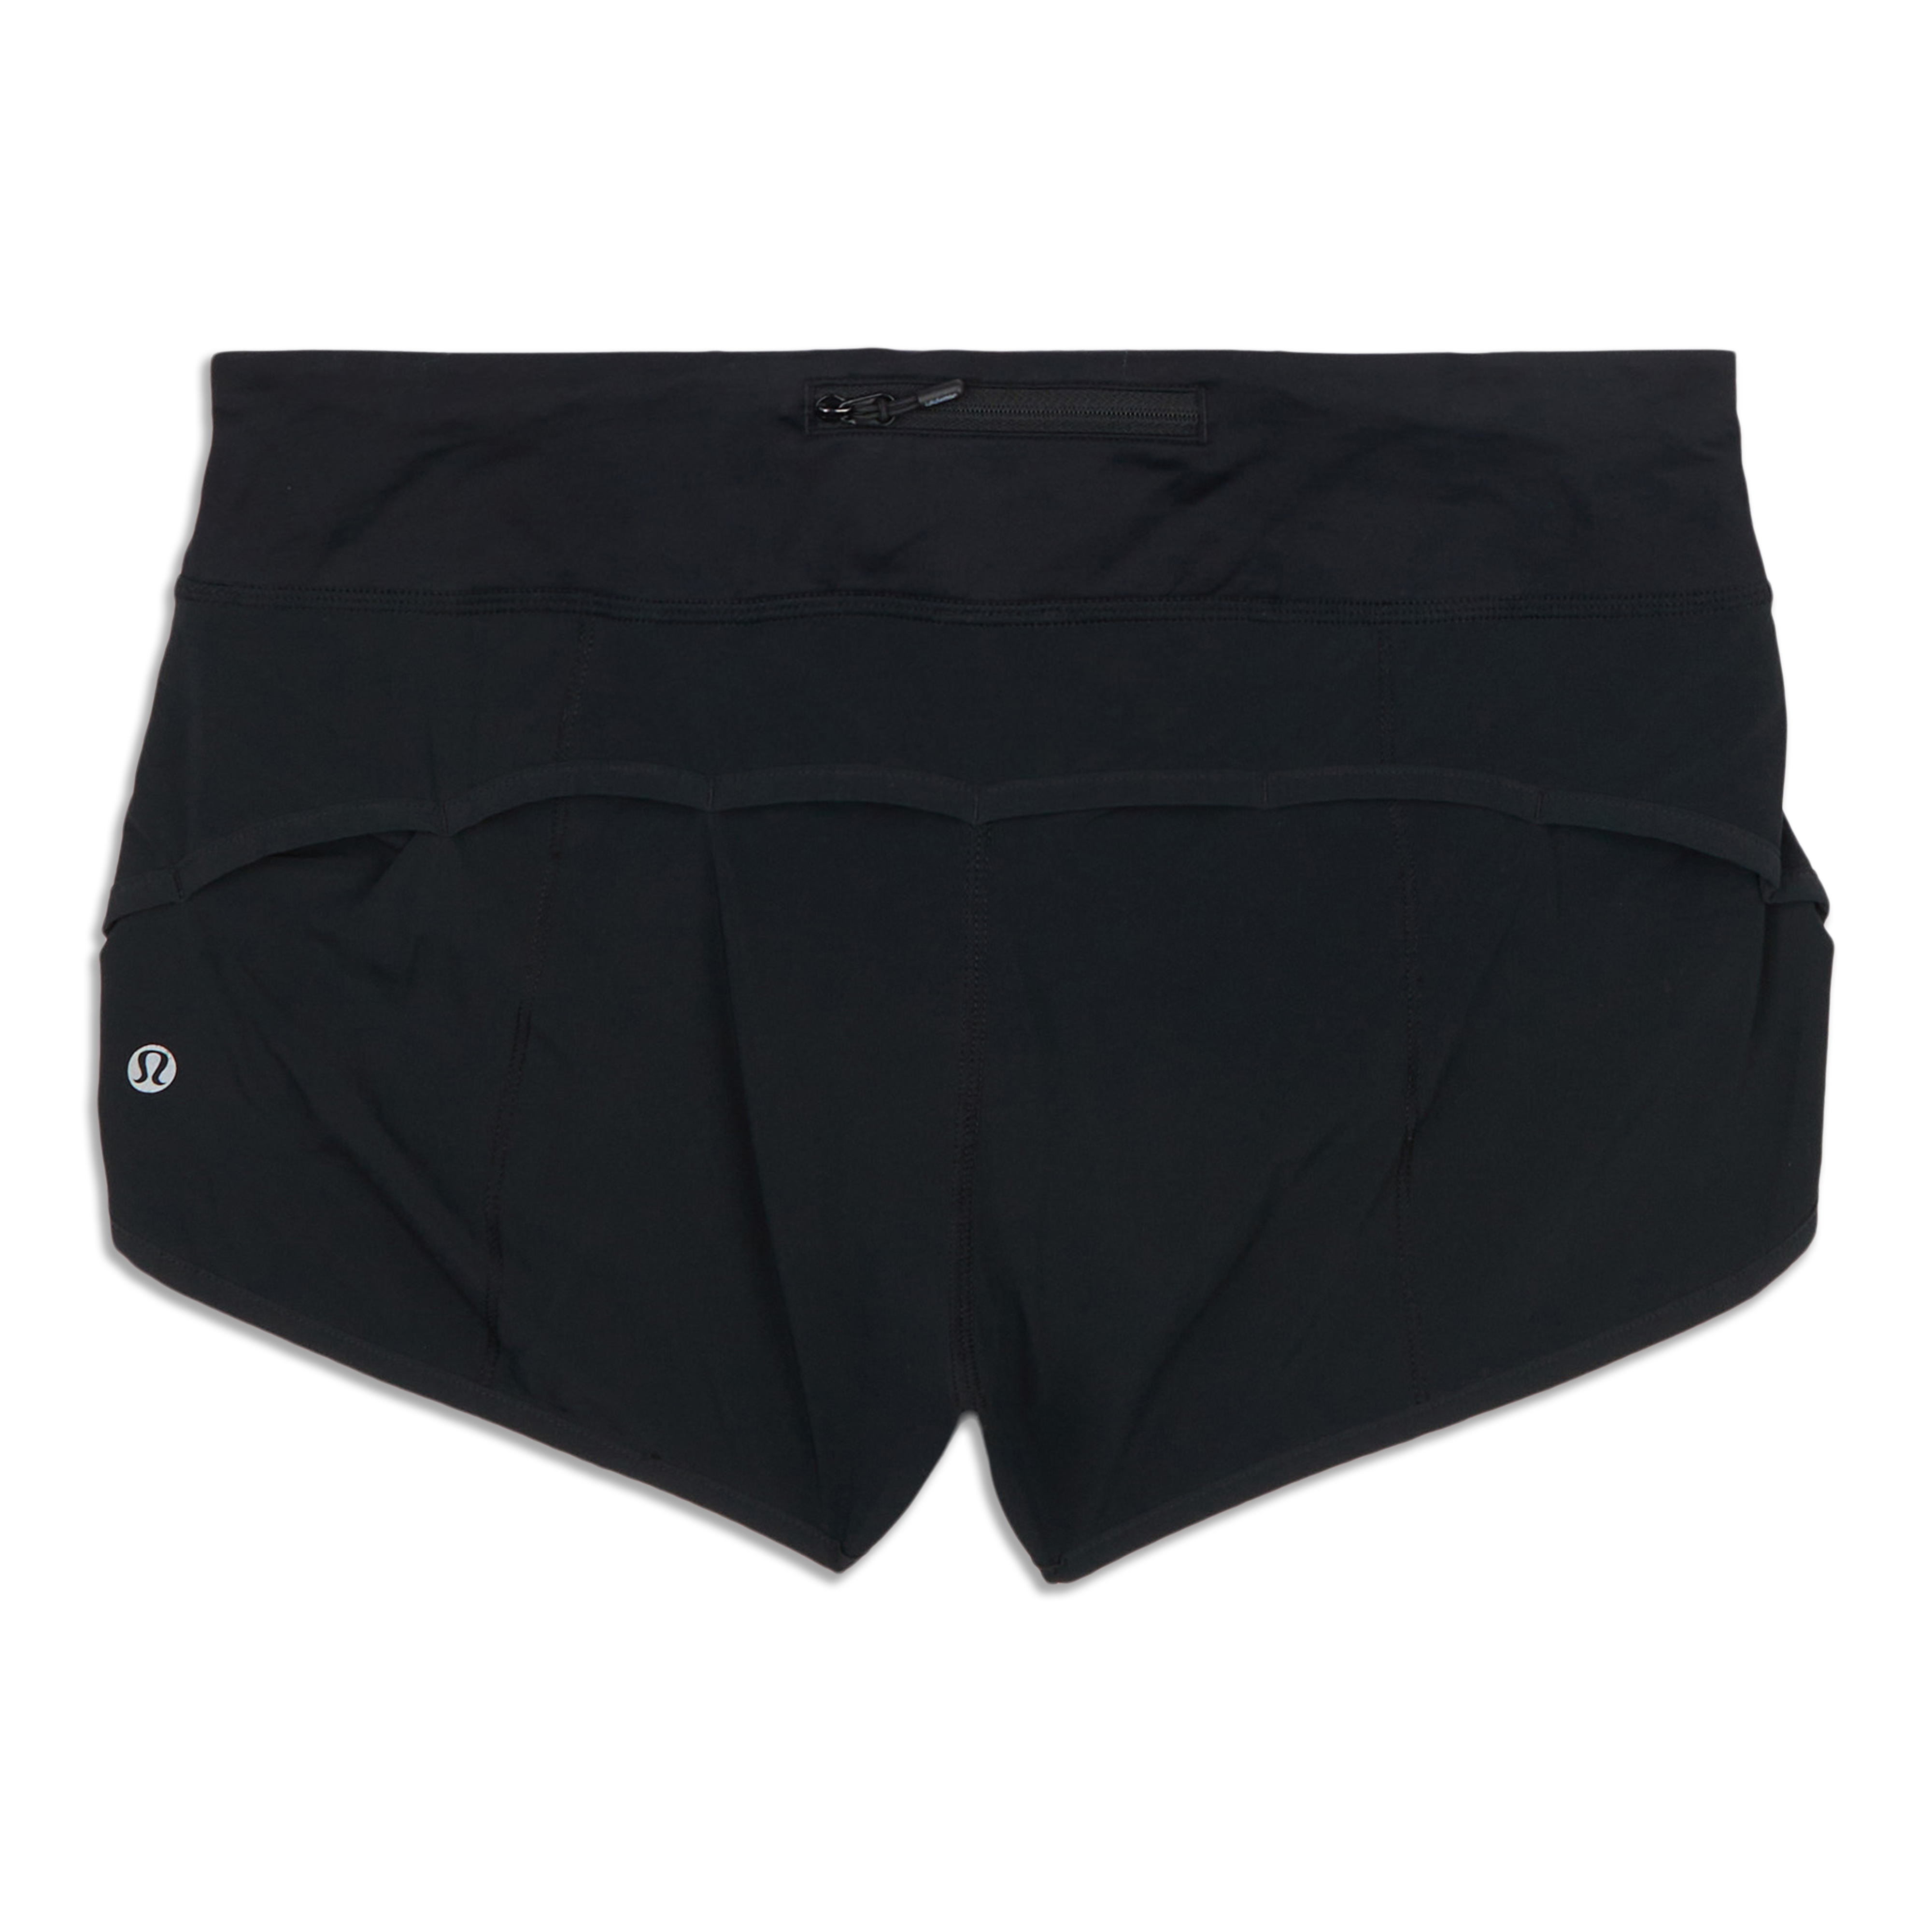 lululemon shorts Addict? Product Drop and Restock Updates